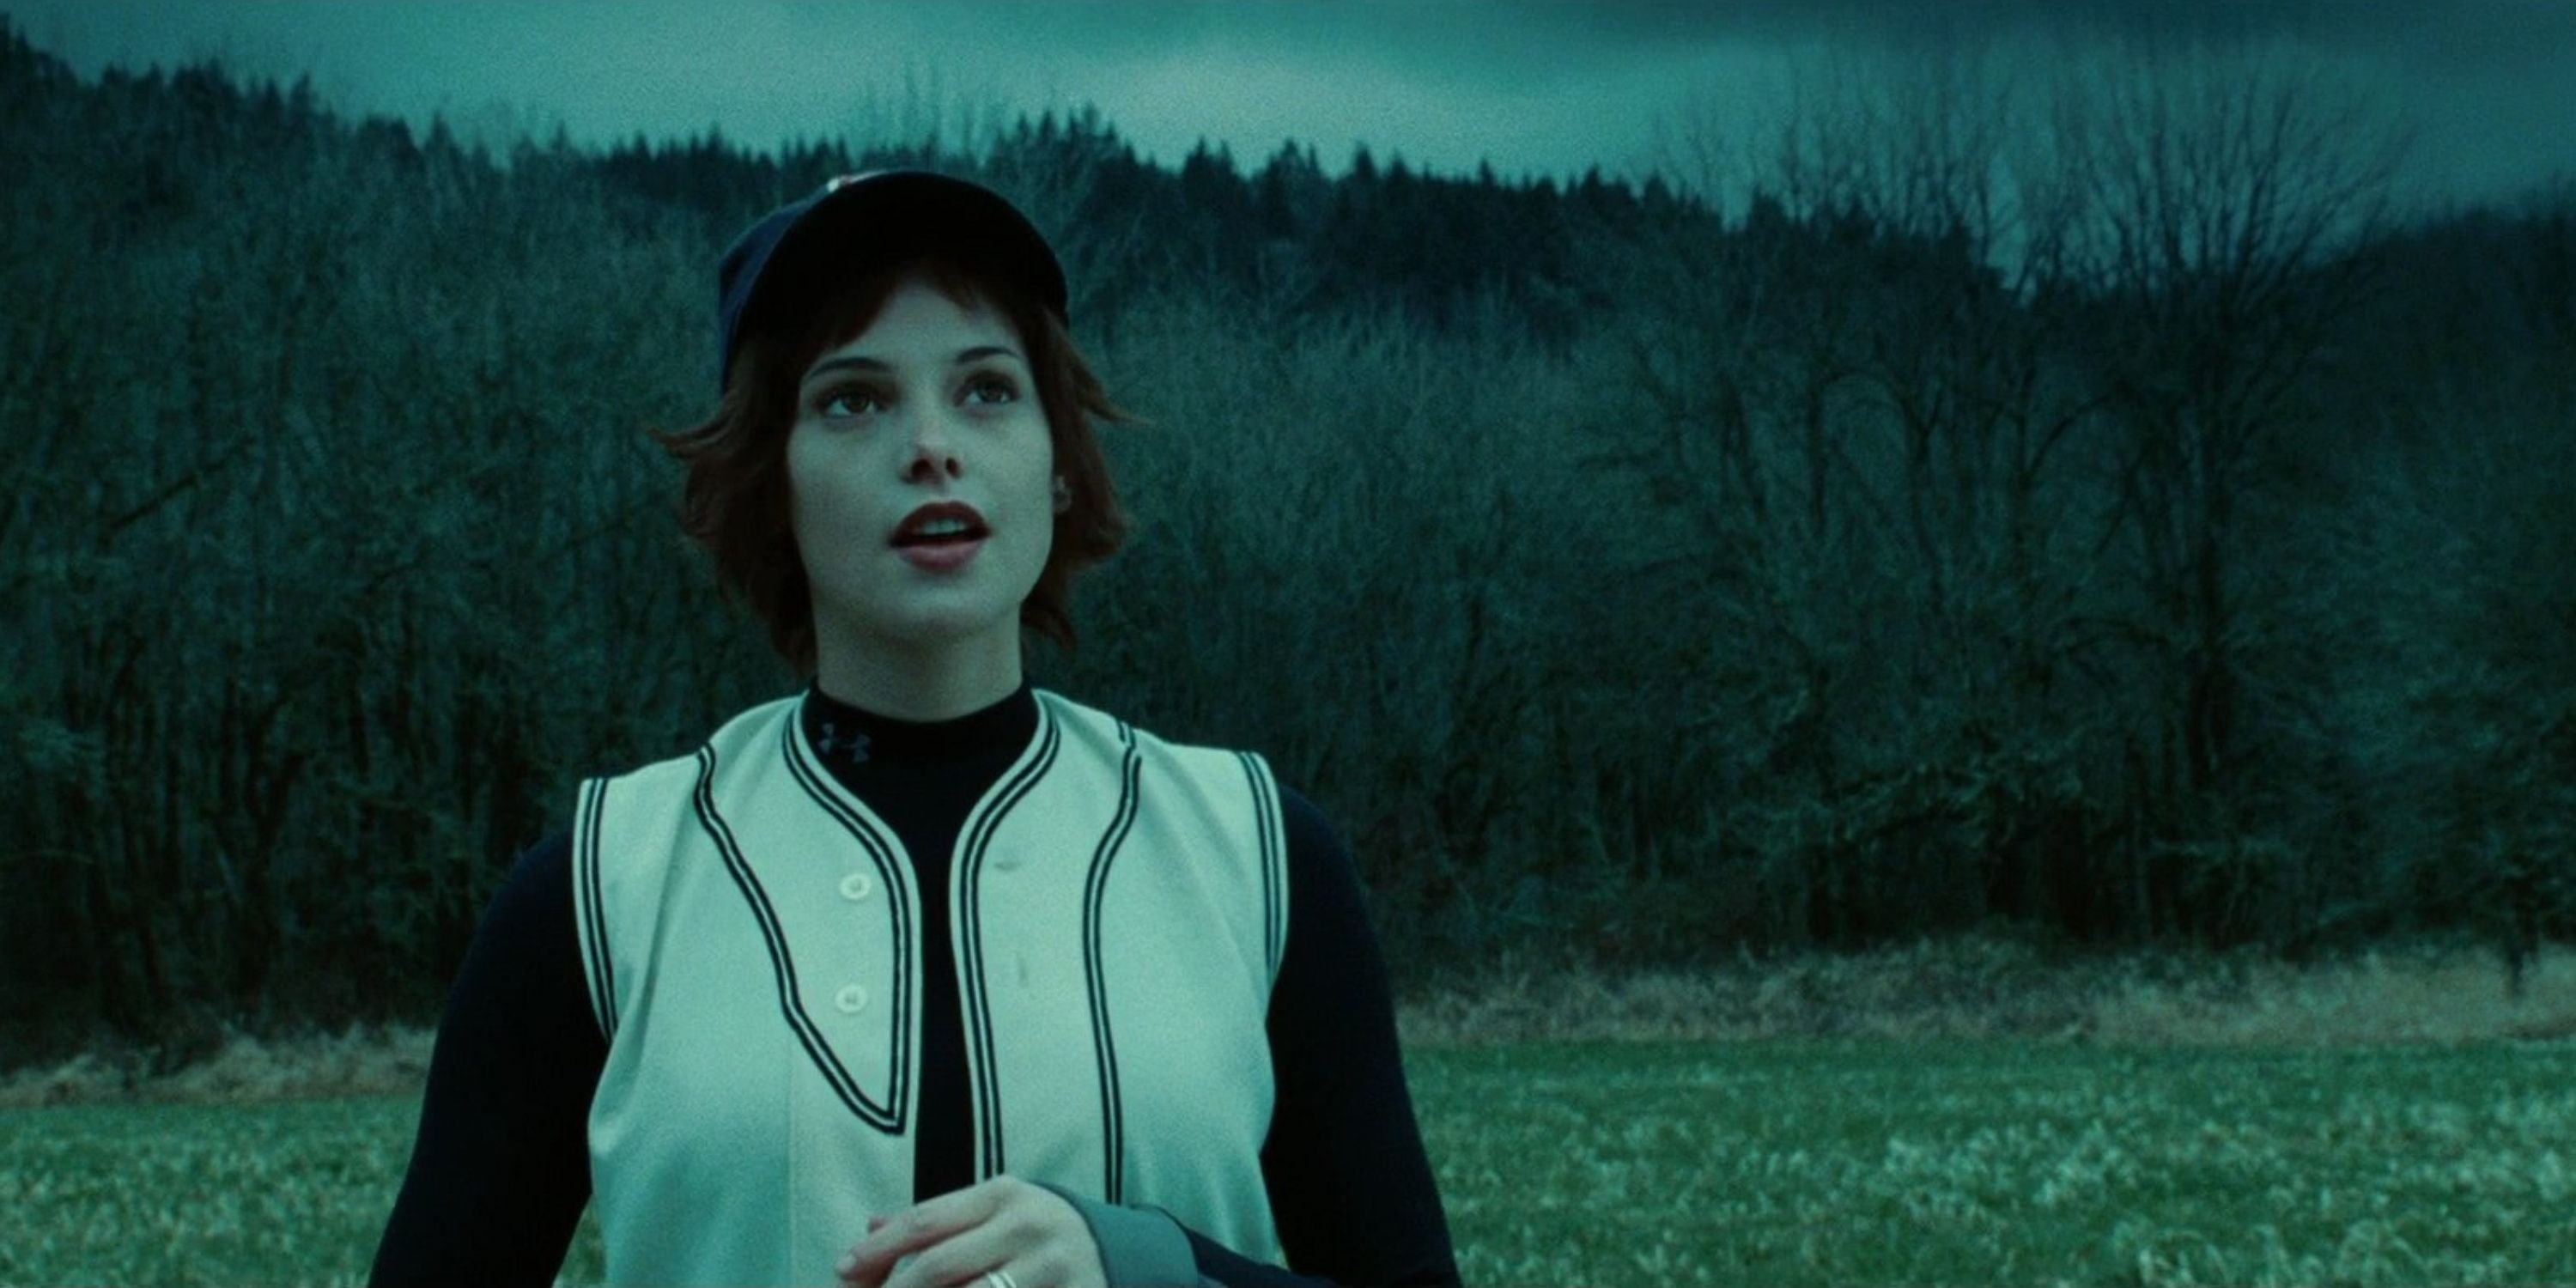 Alice Cullen in 'Twilight', she is a pale white woman in baseball getup in a field.